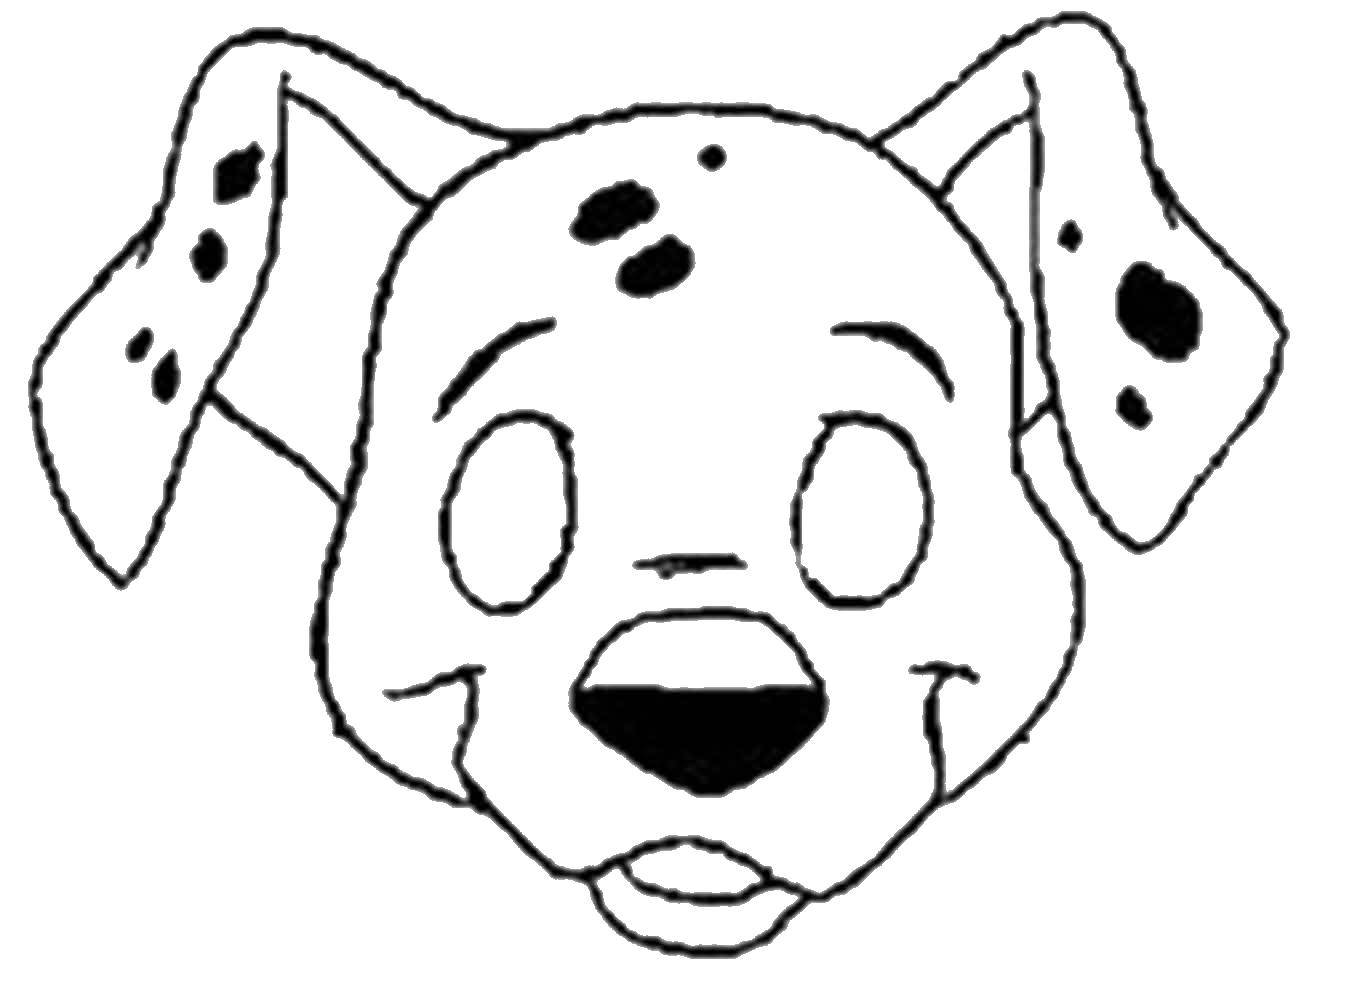 Название: Раскраска Маска далматинец. Категория: Маски. Теги: маска, далматинец, собака.